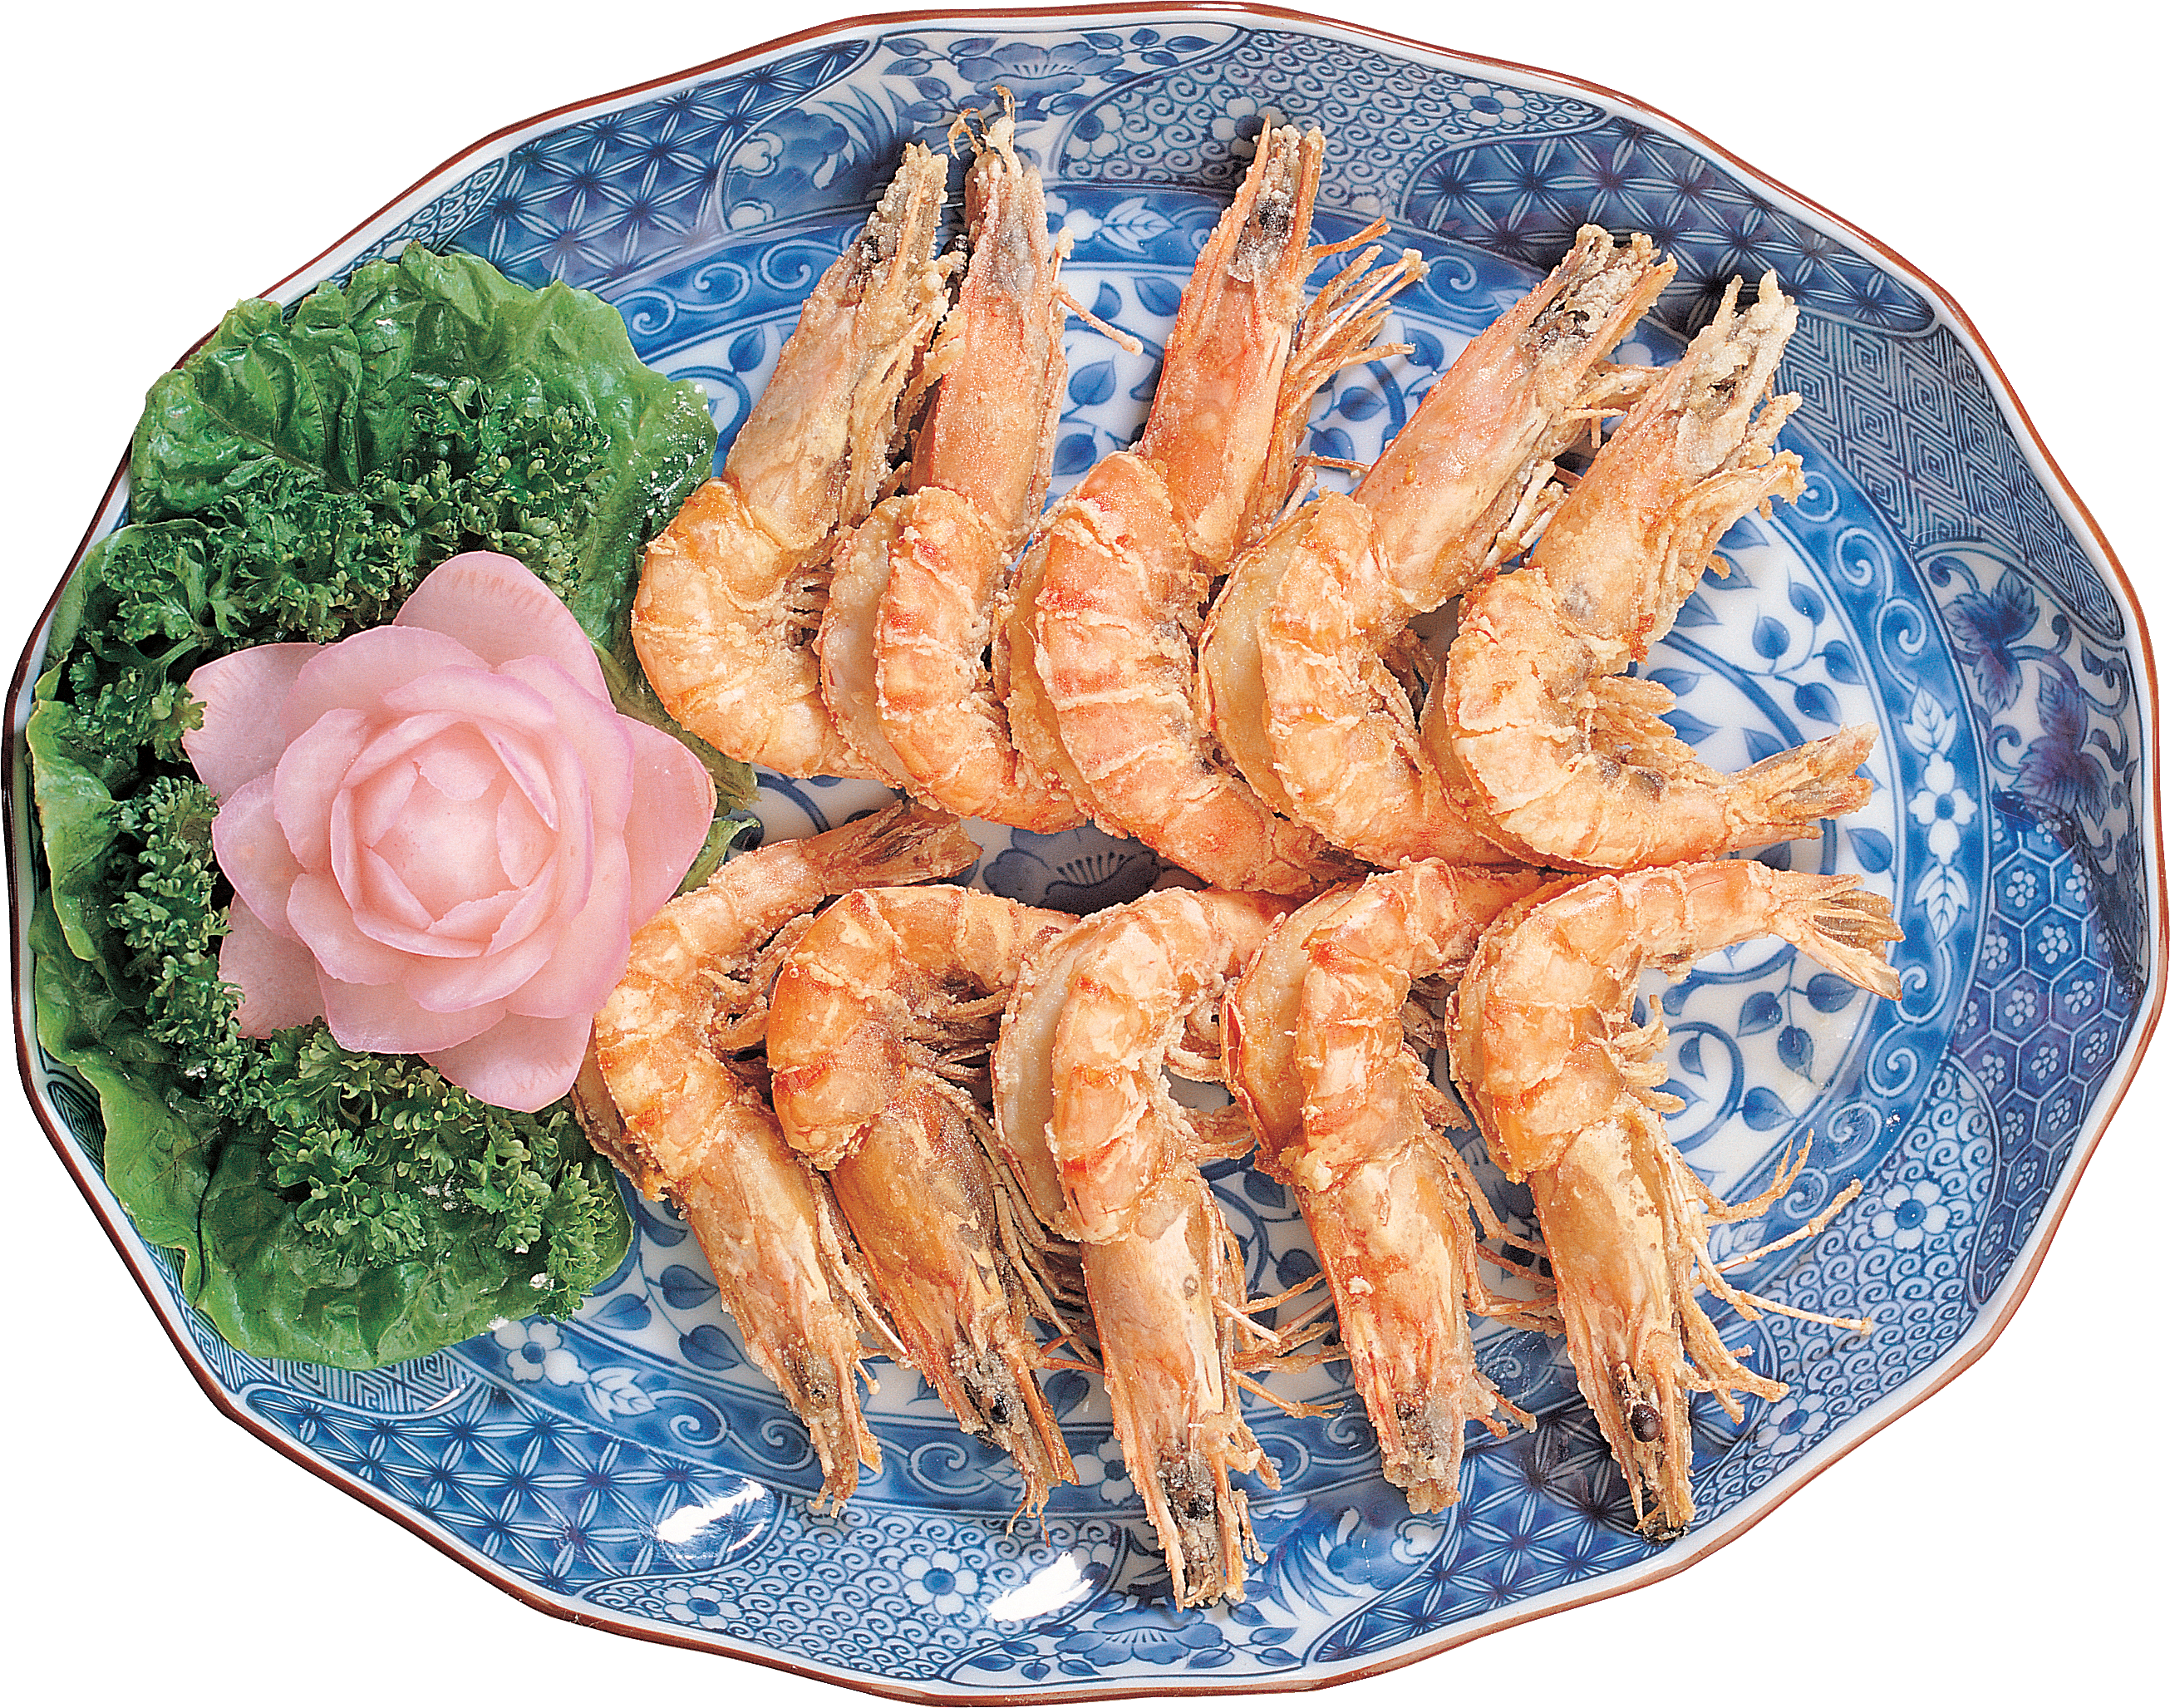 Shrimps plate PNG image